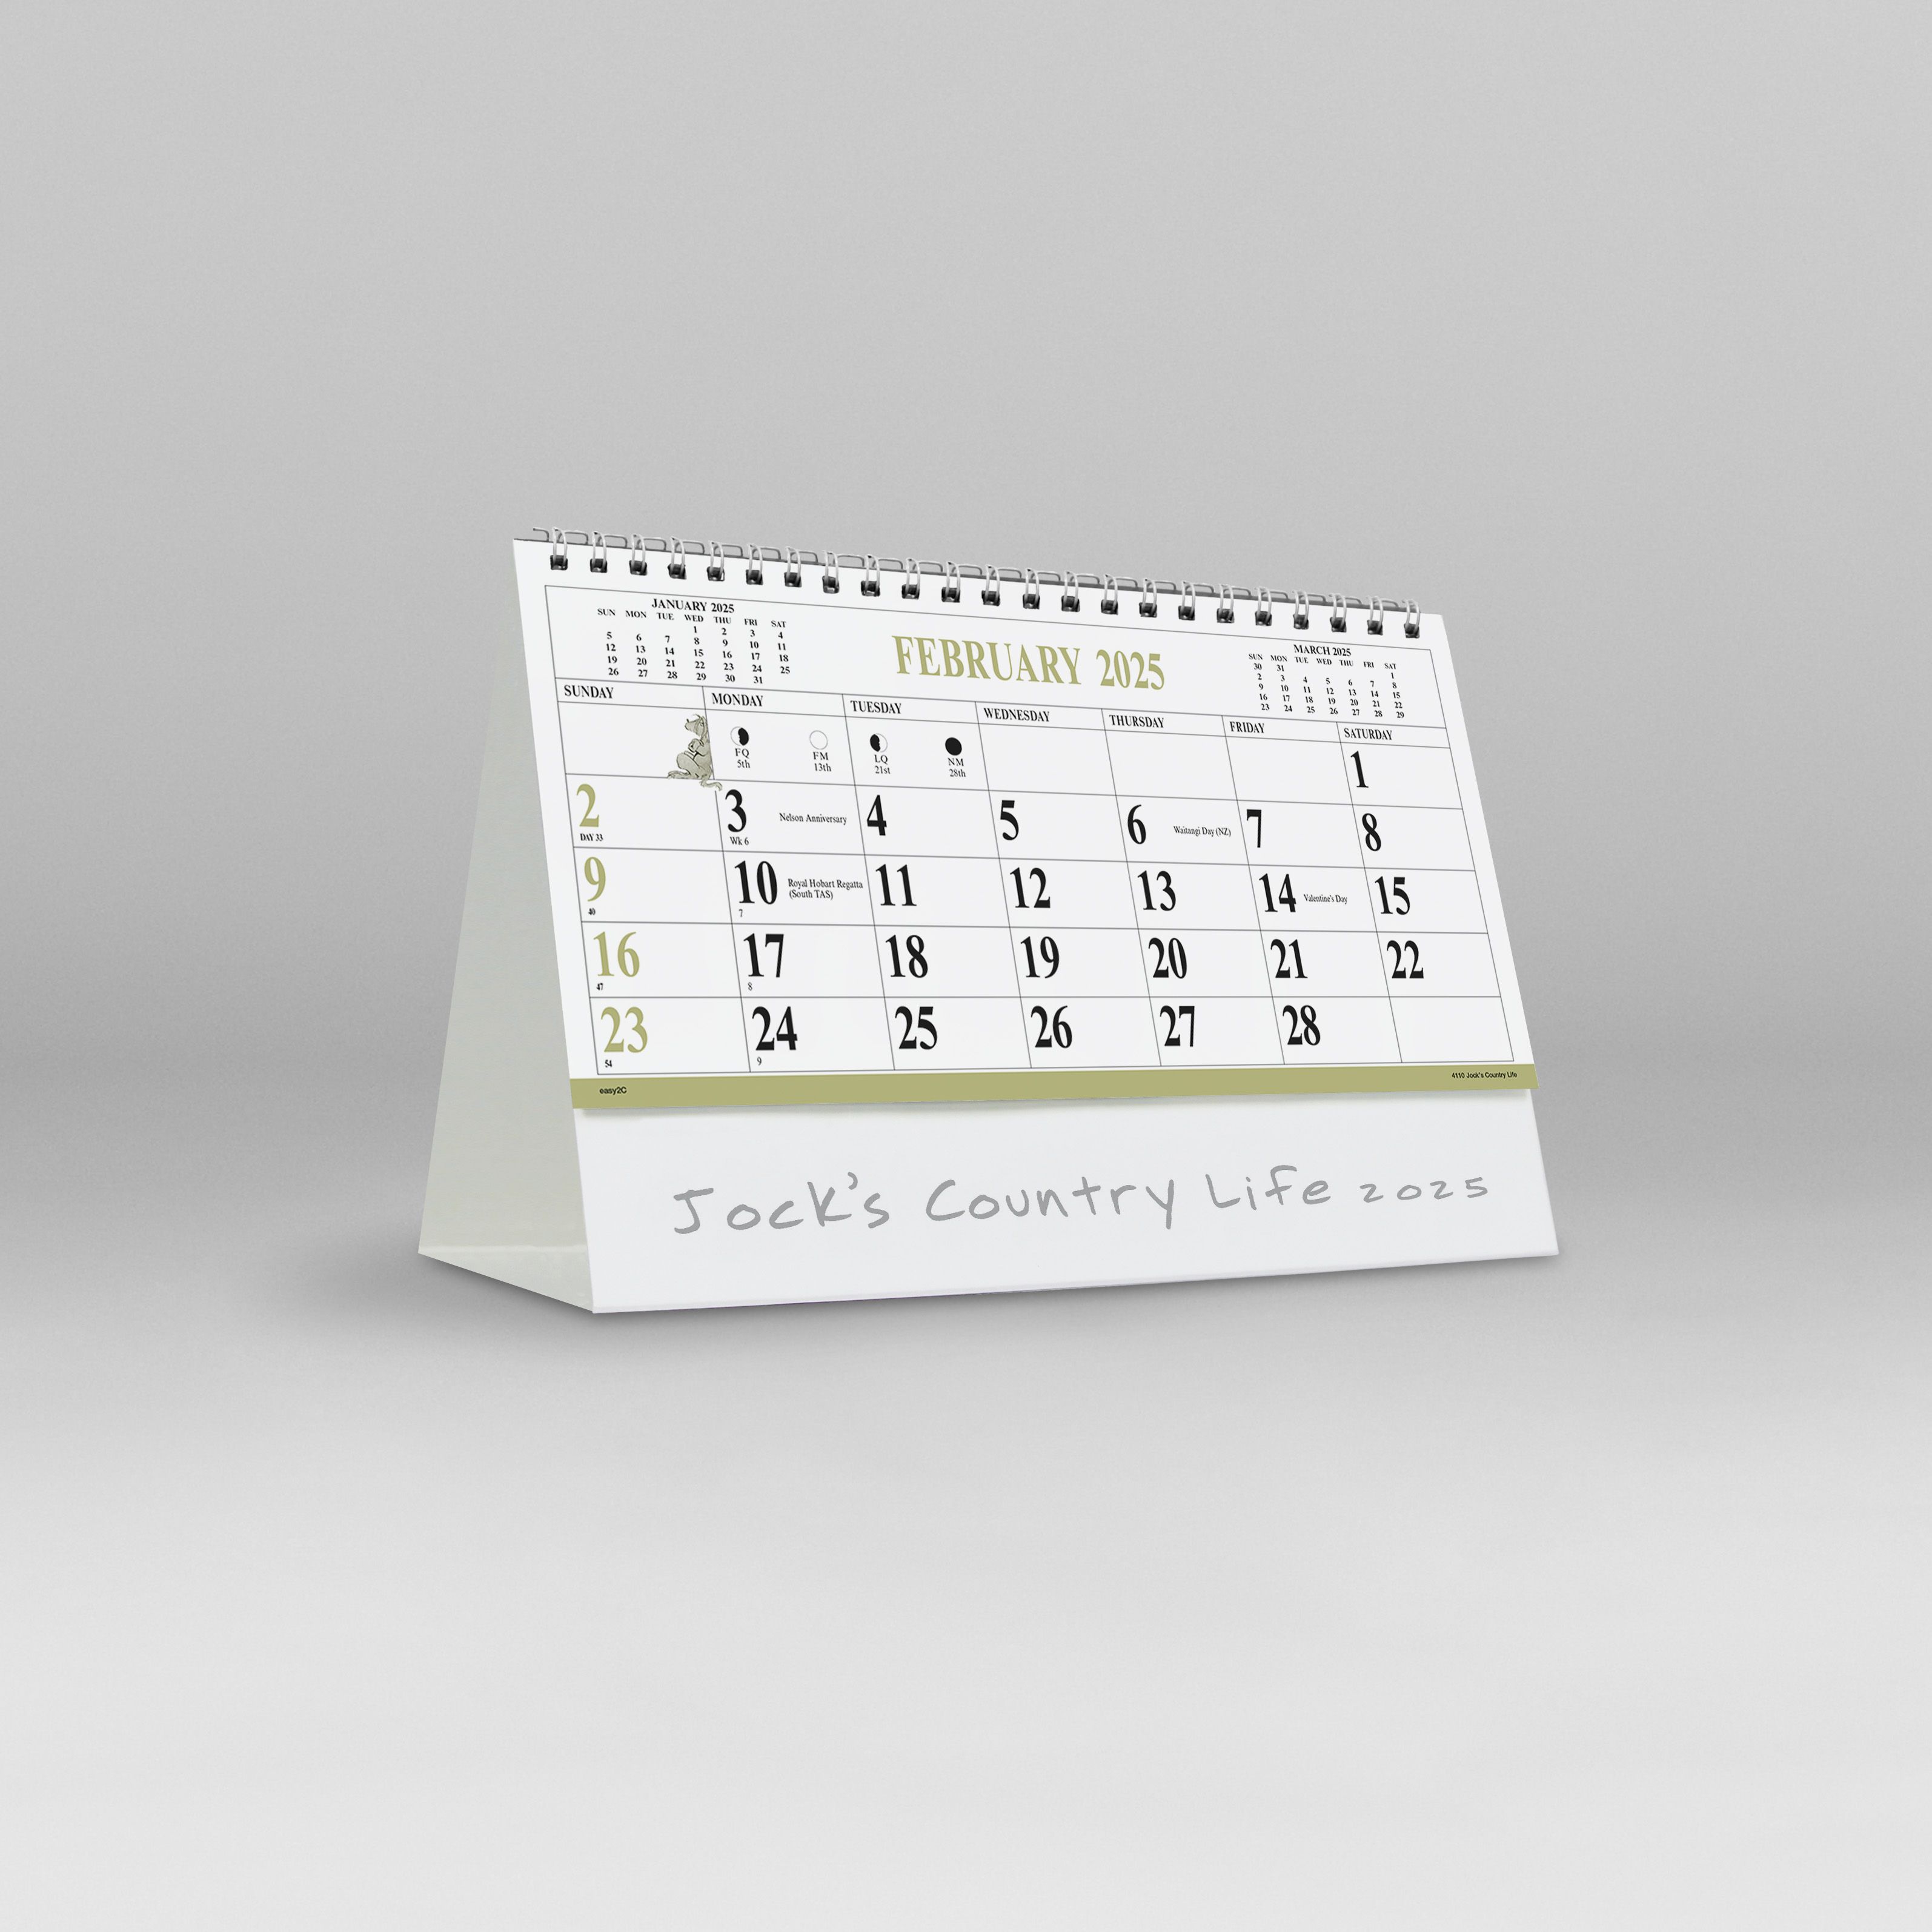 Jocks Country Life Desk retail_4203_25_03